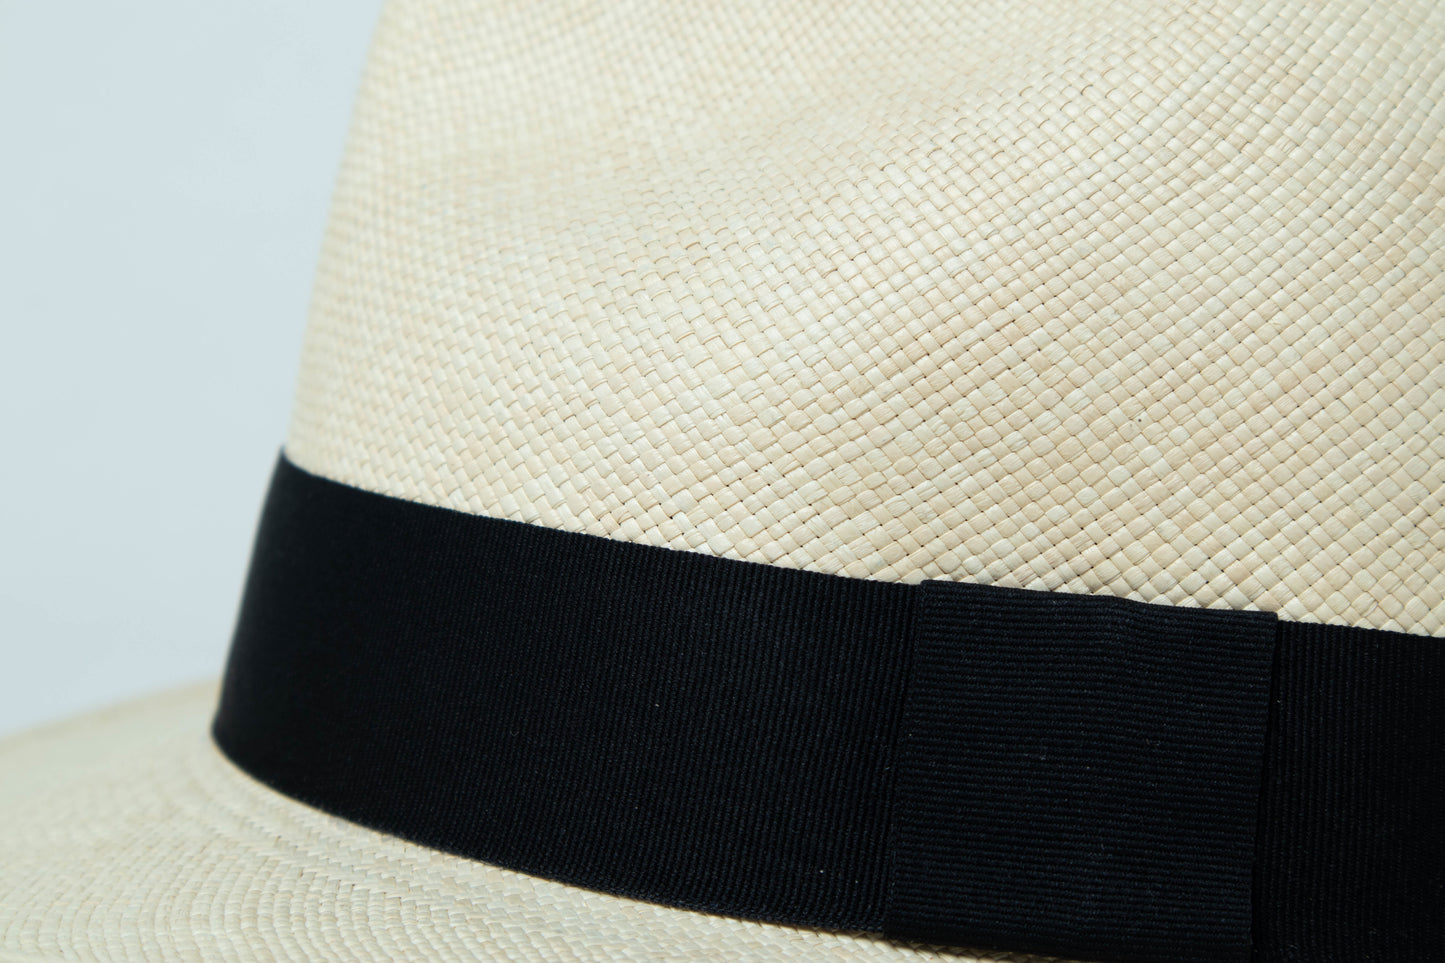 Genuine Classic Panama Hat